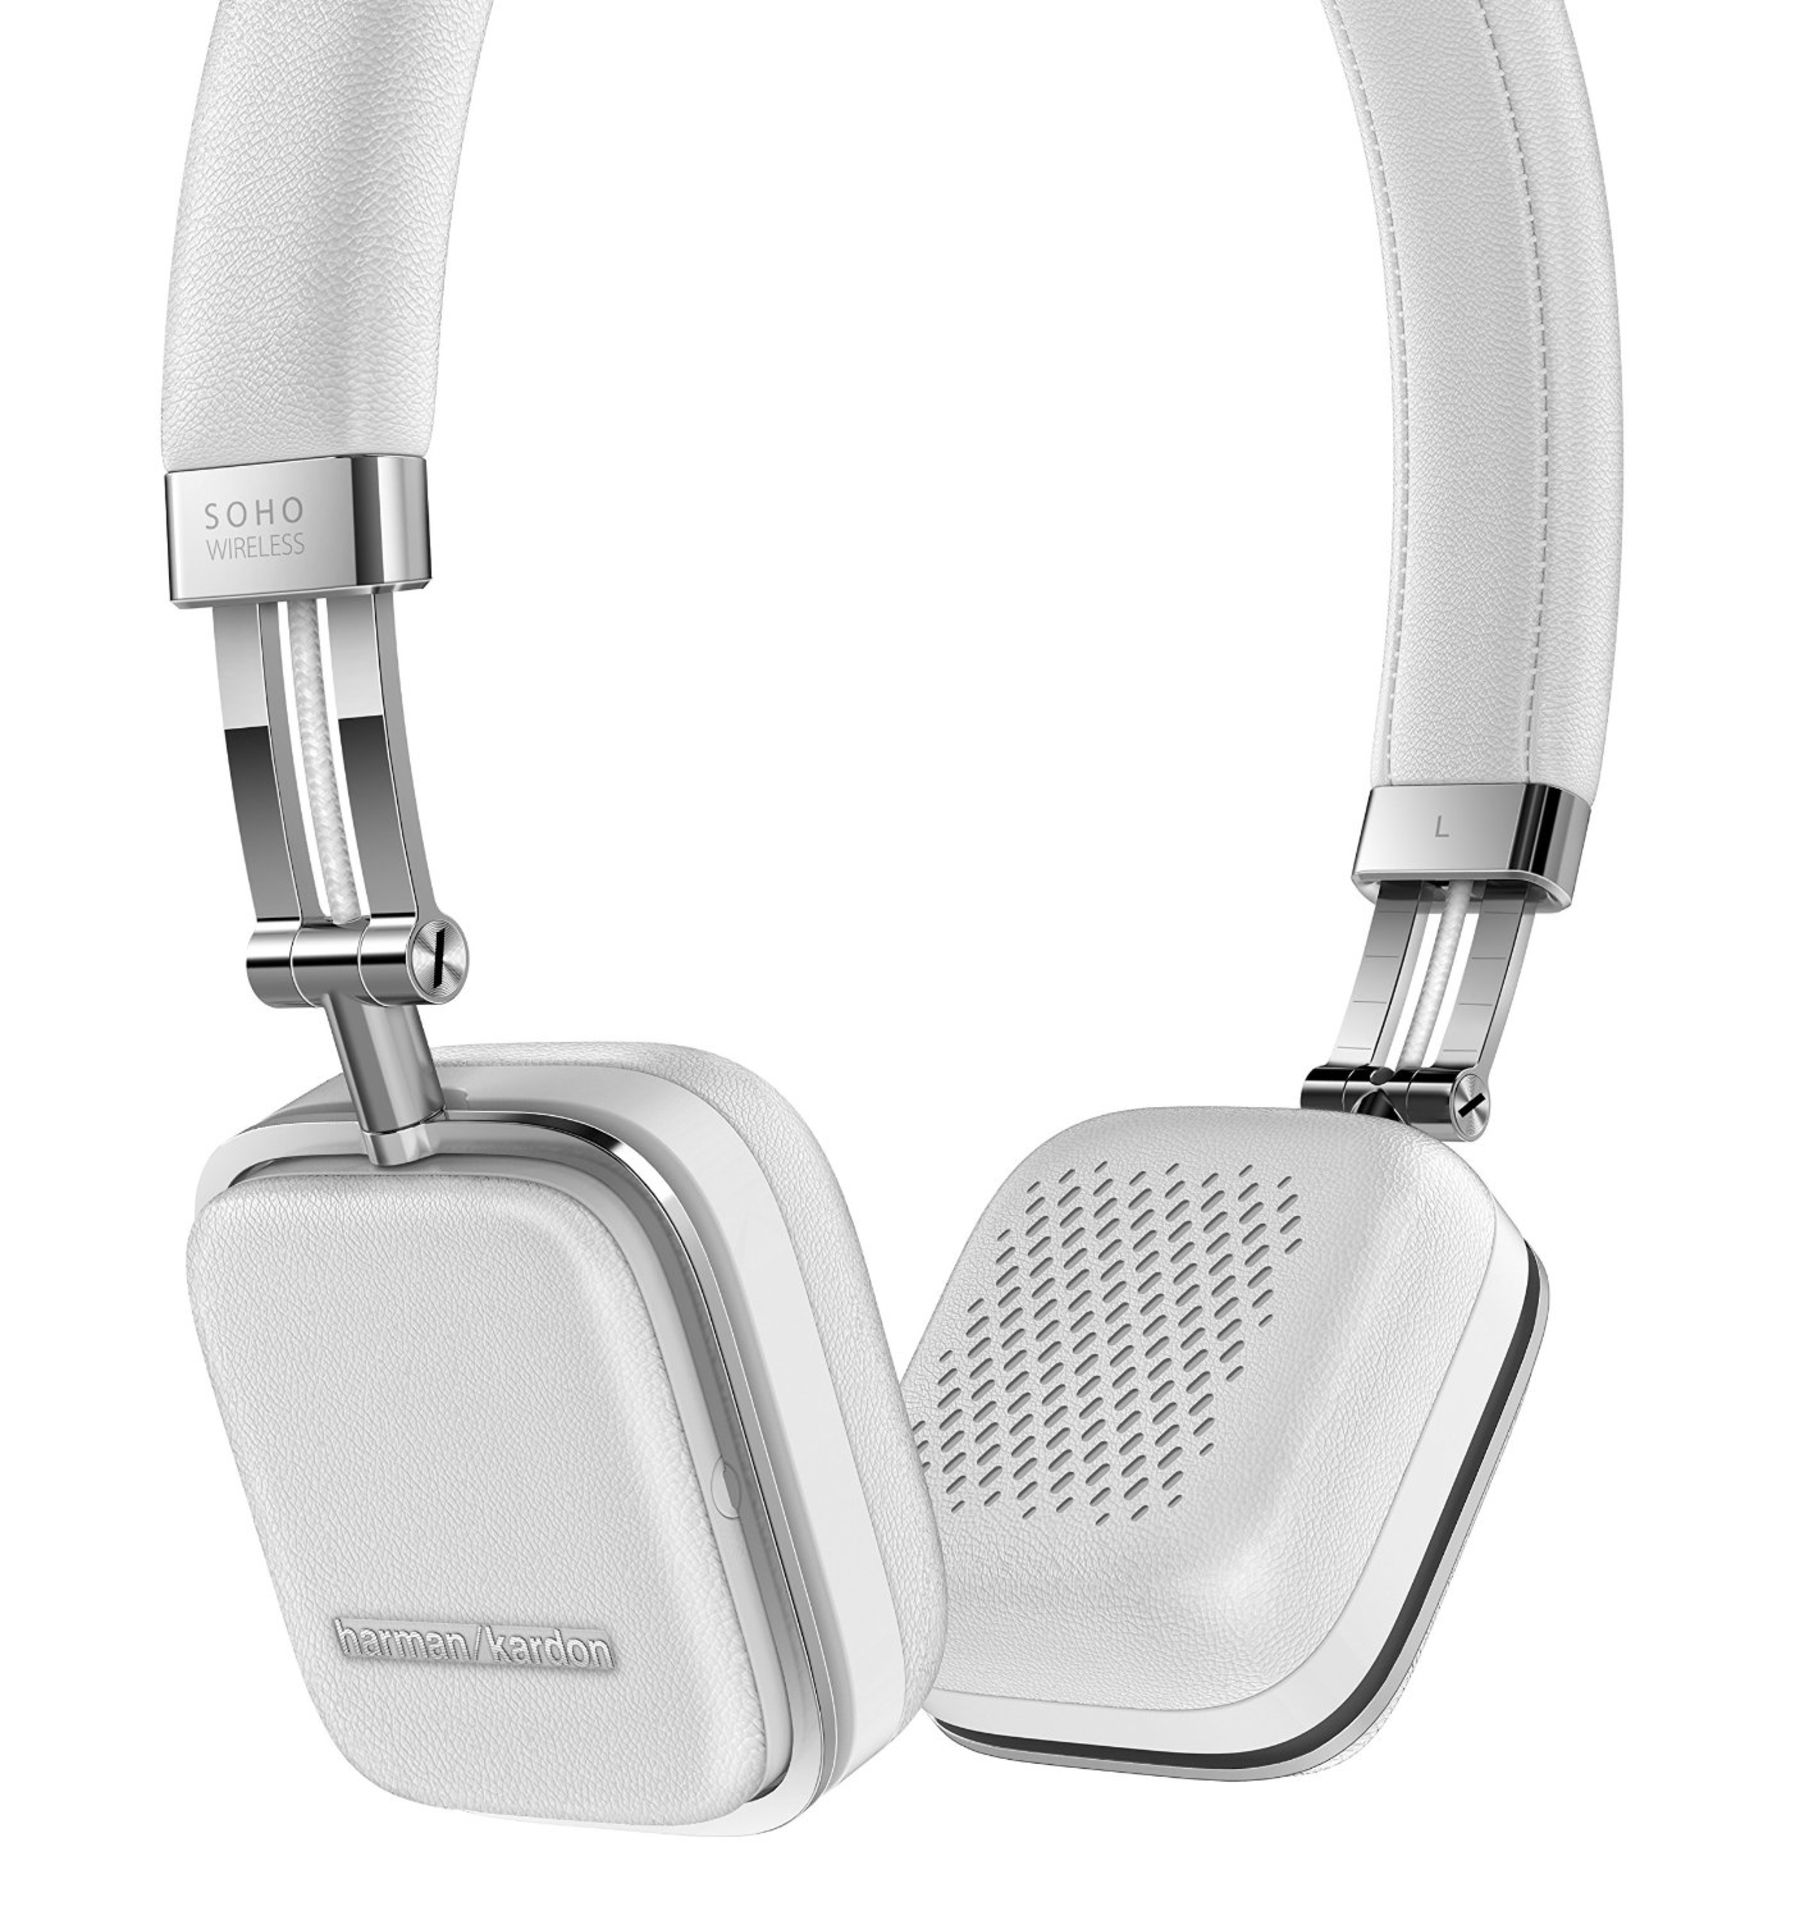 V Brand New Harman Kardon Soho On Ear Wireless Headphones In White RRP:£249.99 Amazon Price £229. - Image 2 of 2